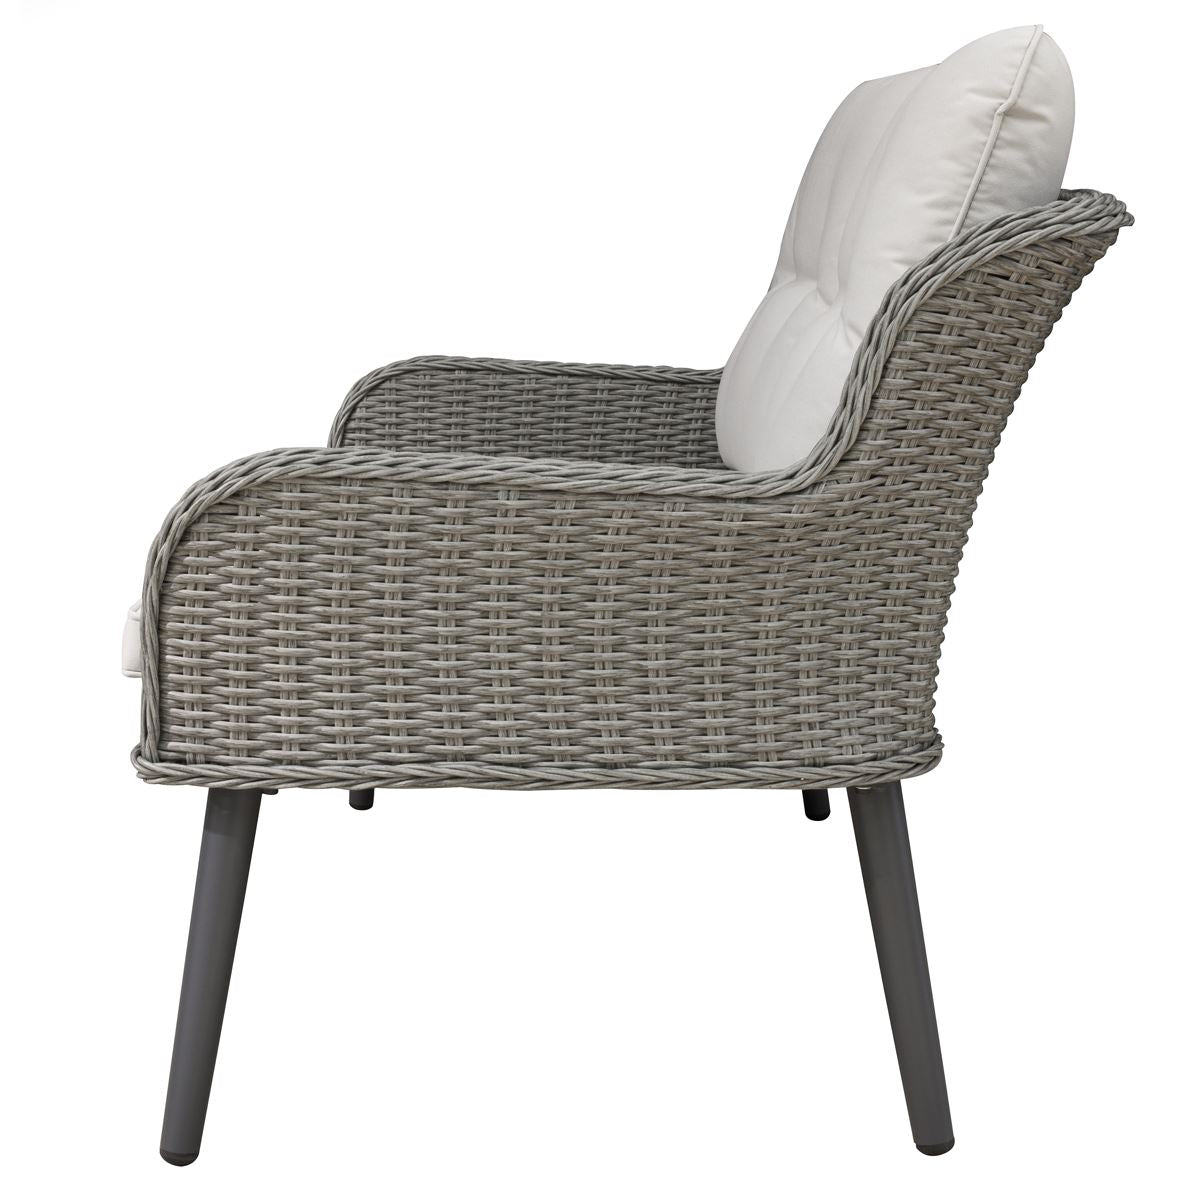 Dellonda Buxton Rattan Wicker Outdoor Lounge 2-Seater Sofa with Cushion, Grey